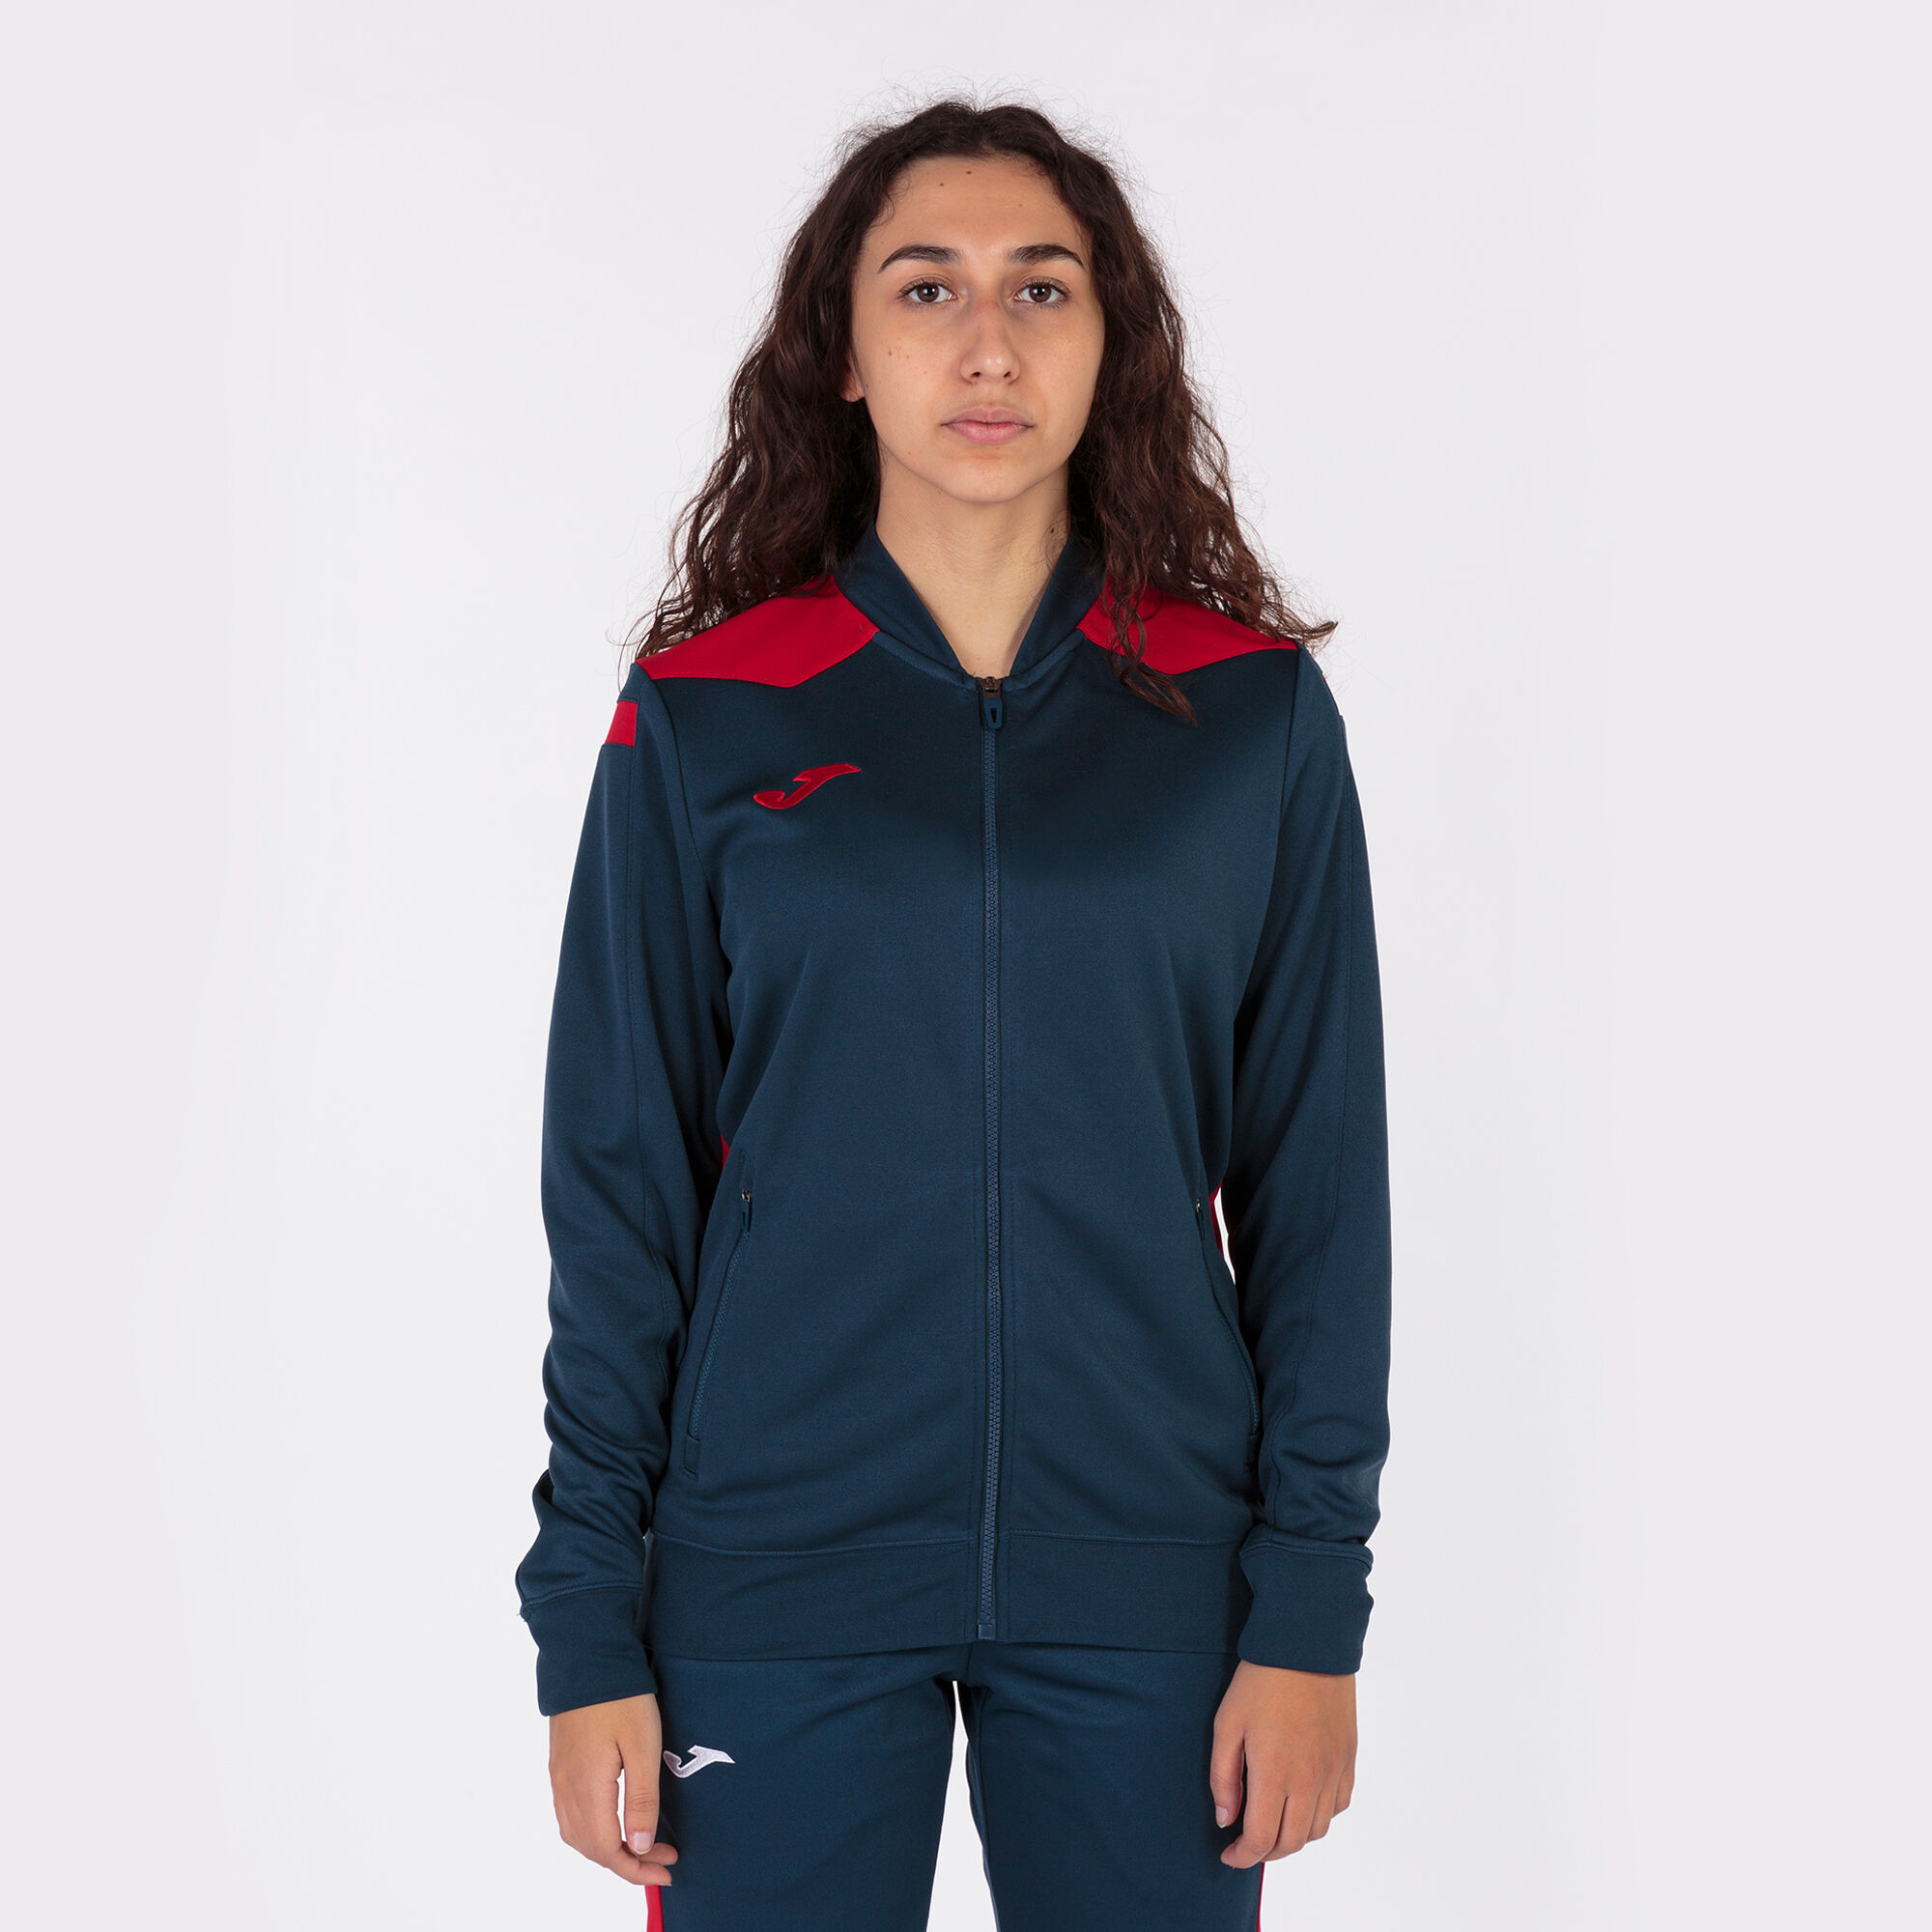 Jacket woman Championship VI navy blue red